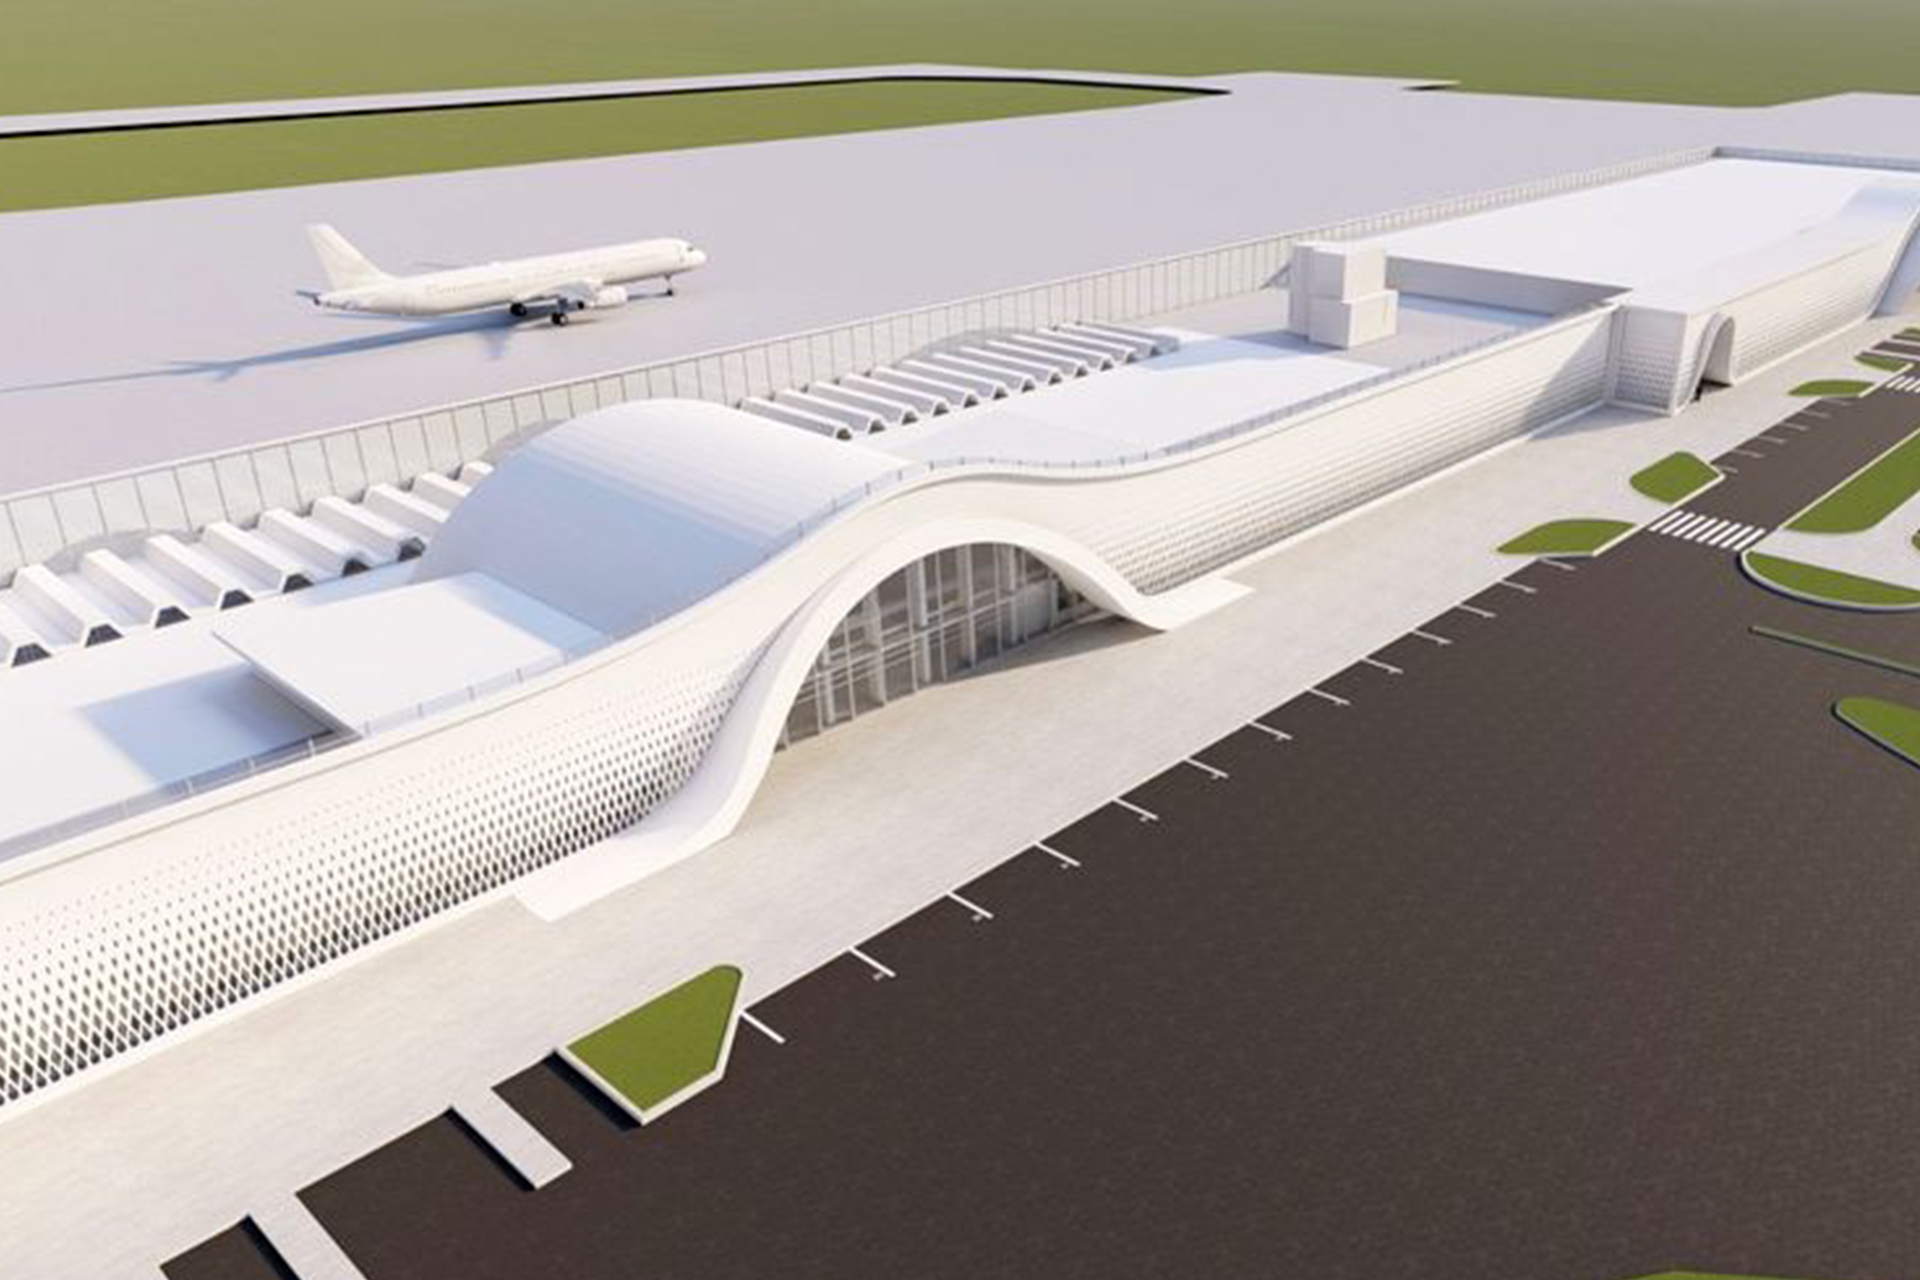 Aeroportul Mihail Kogalniceanu